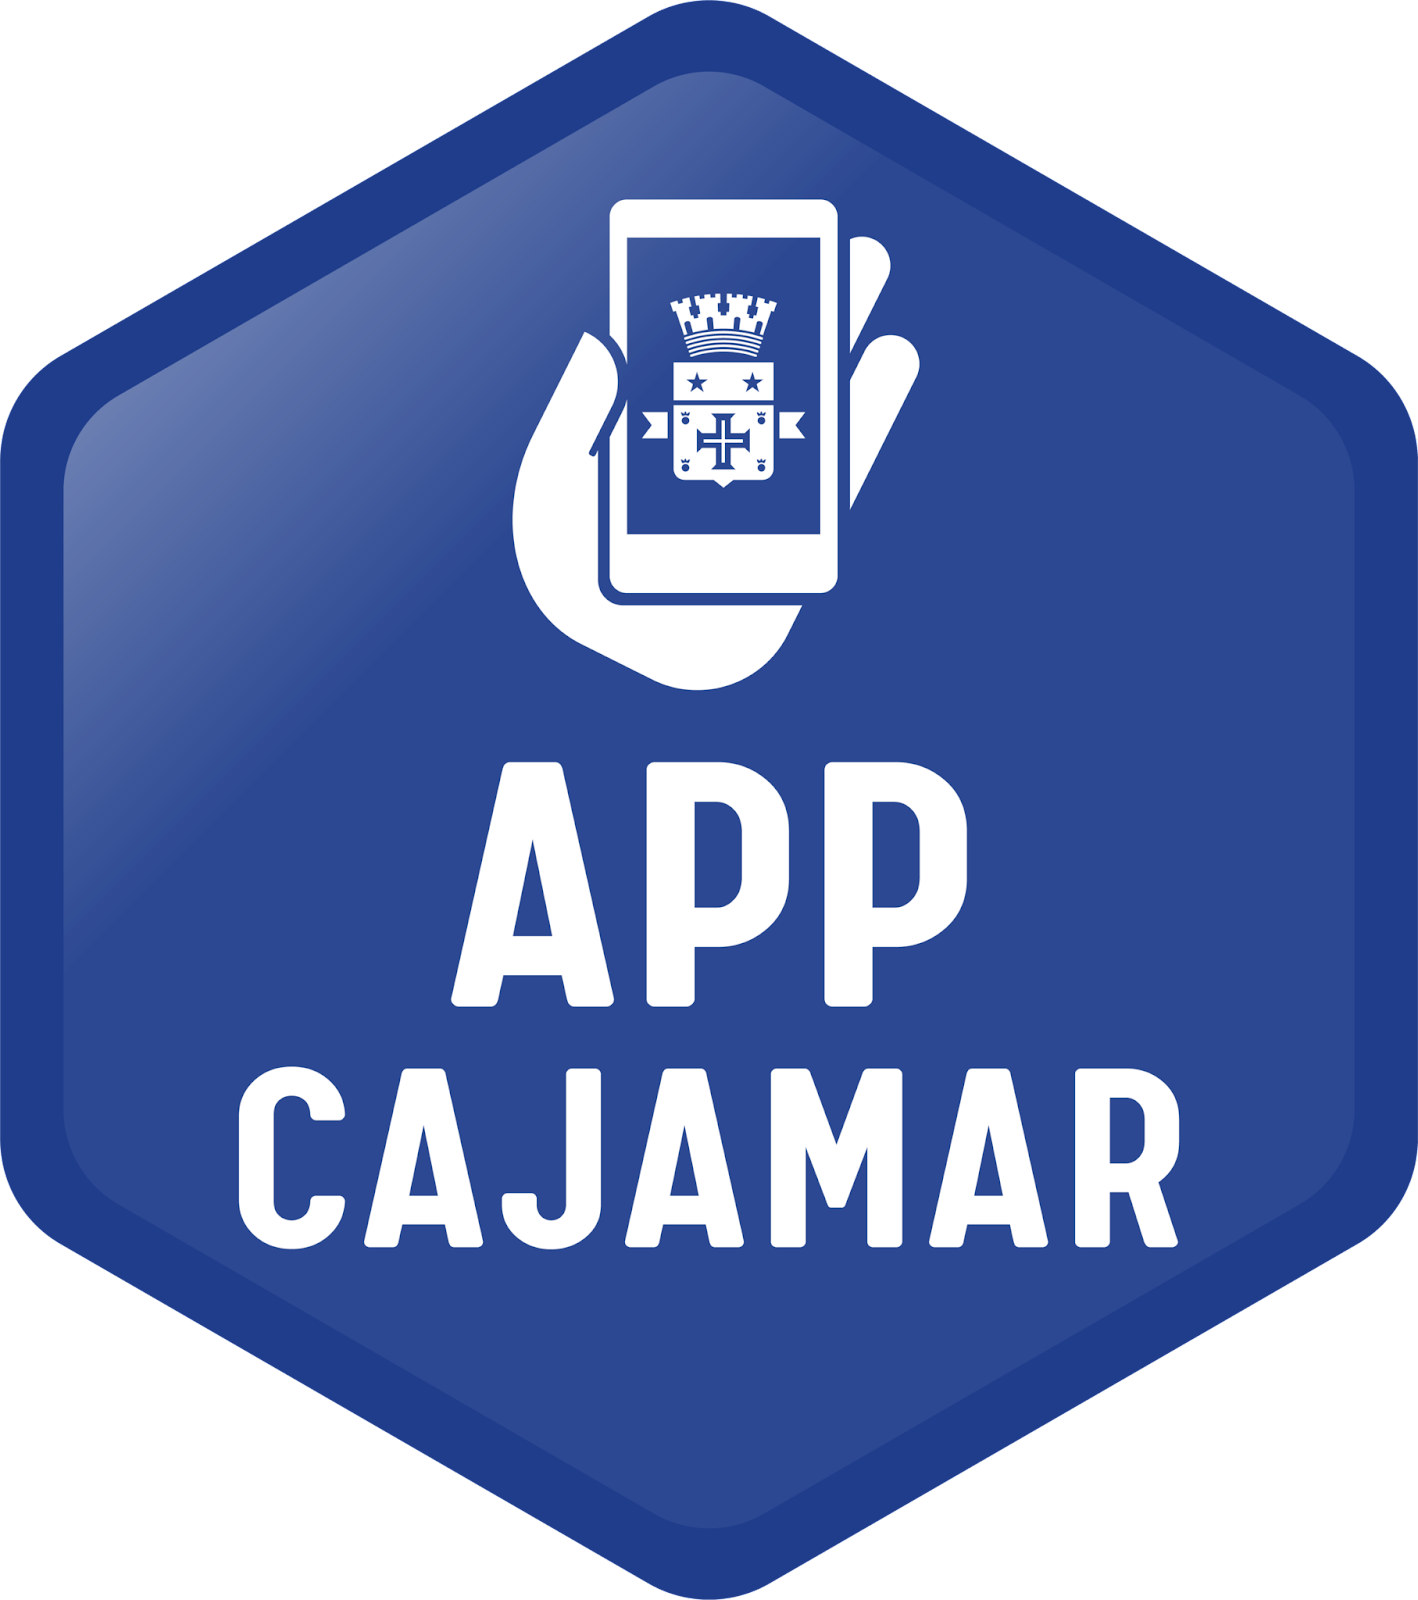 App Cajamar